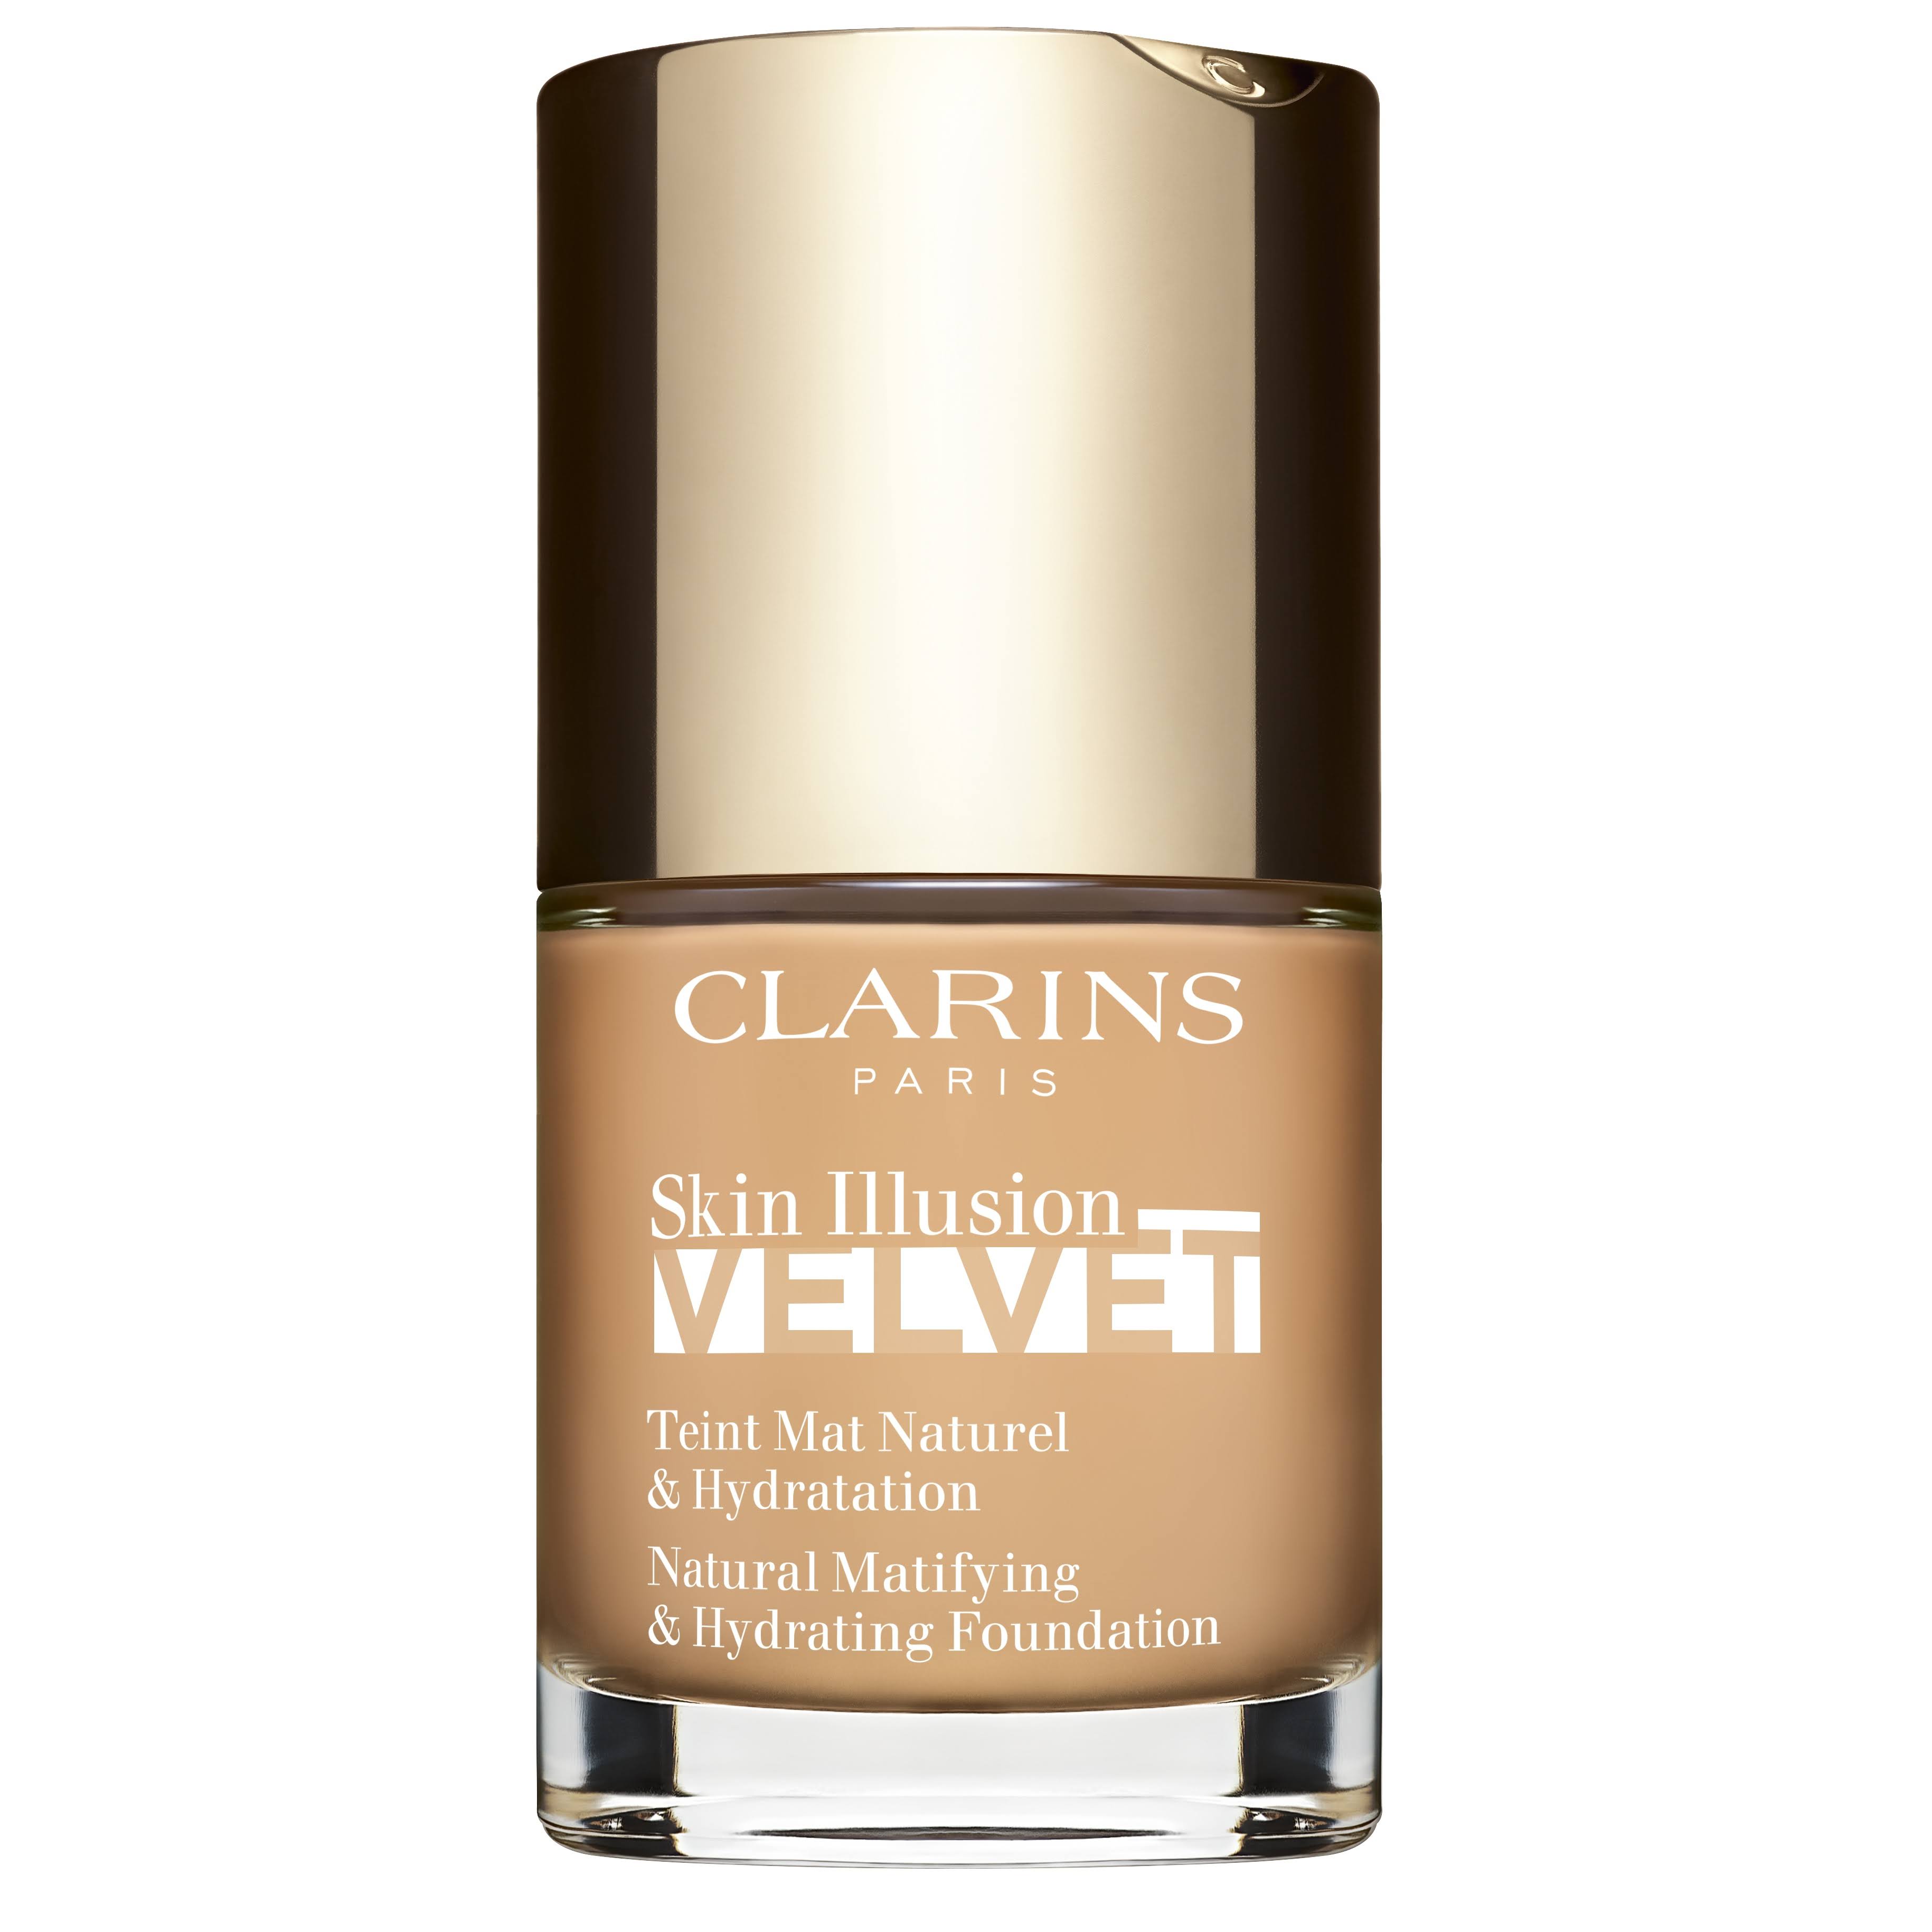 CLARINS - Skin Illusion Velvet 30 ml - 108W